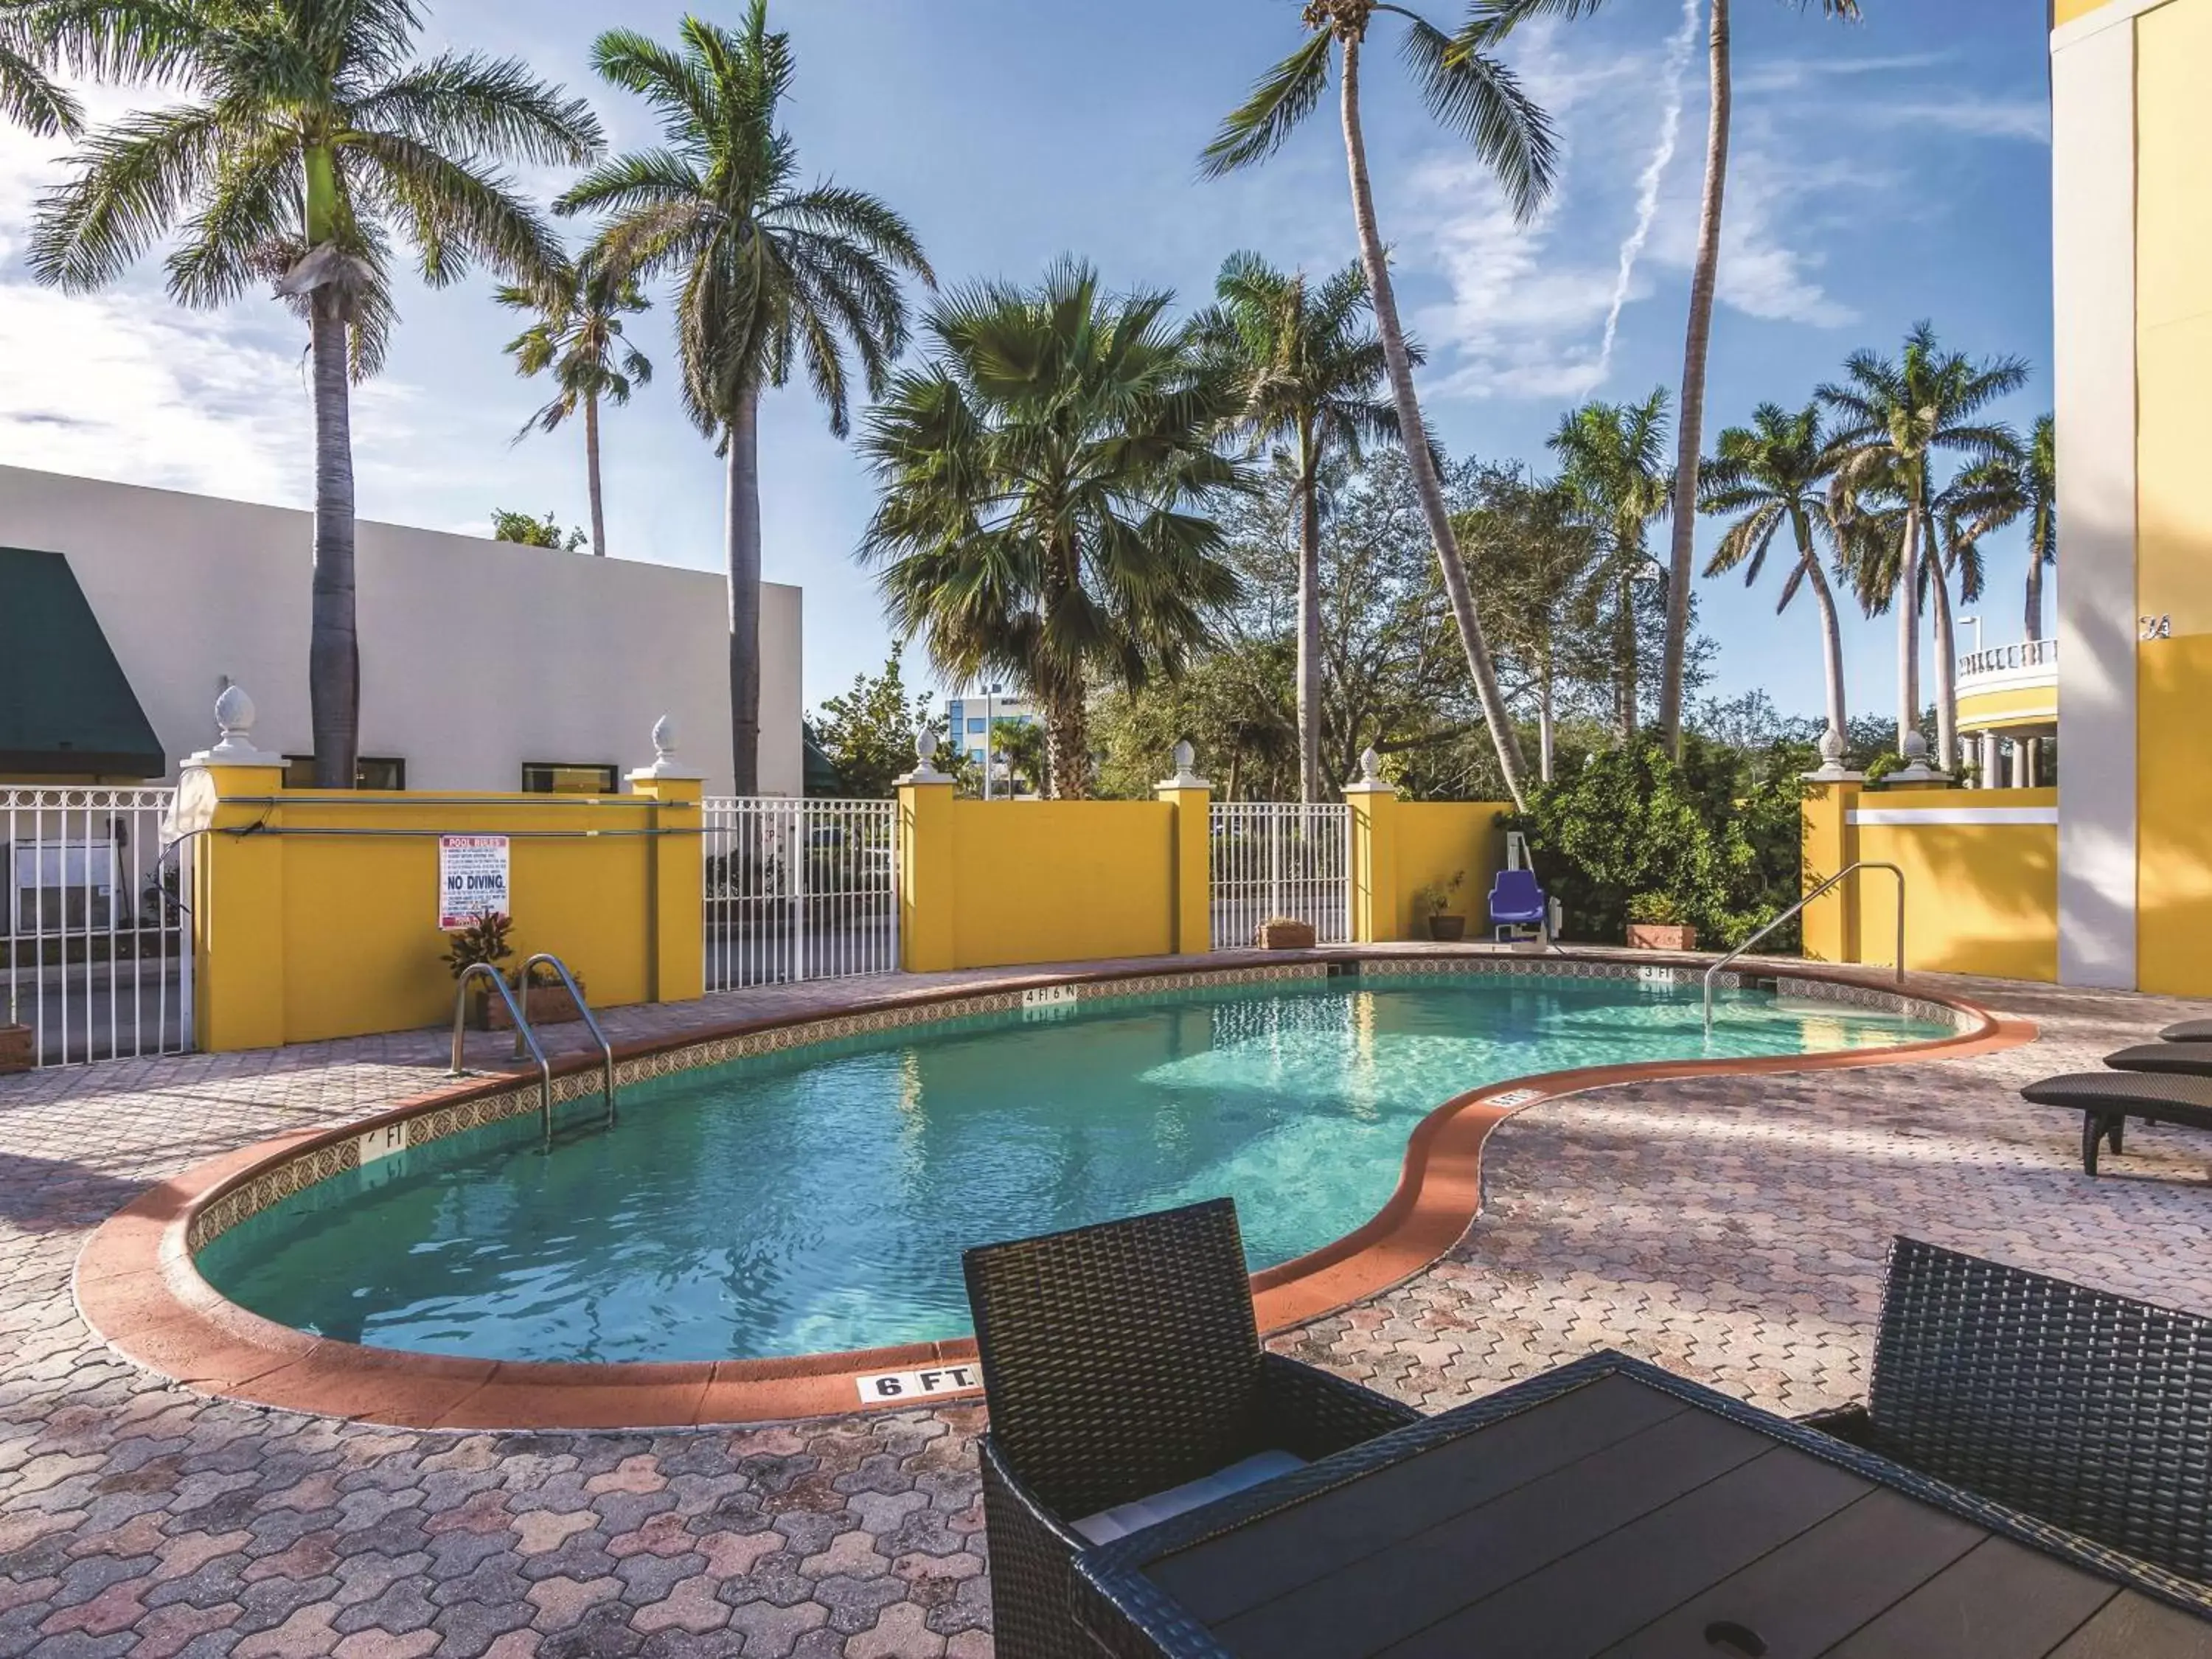 On site, Swimming Pool in La Quinta Inn by Wyndham Jupiter